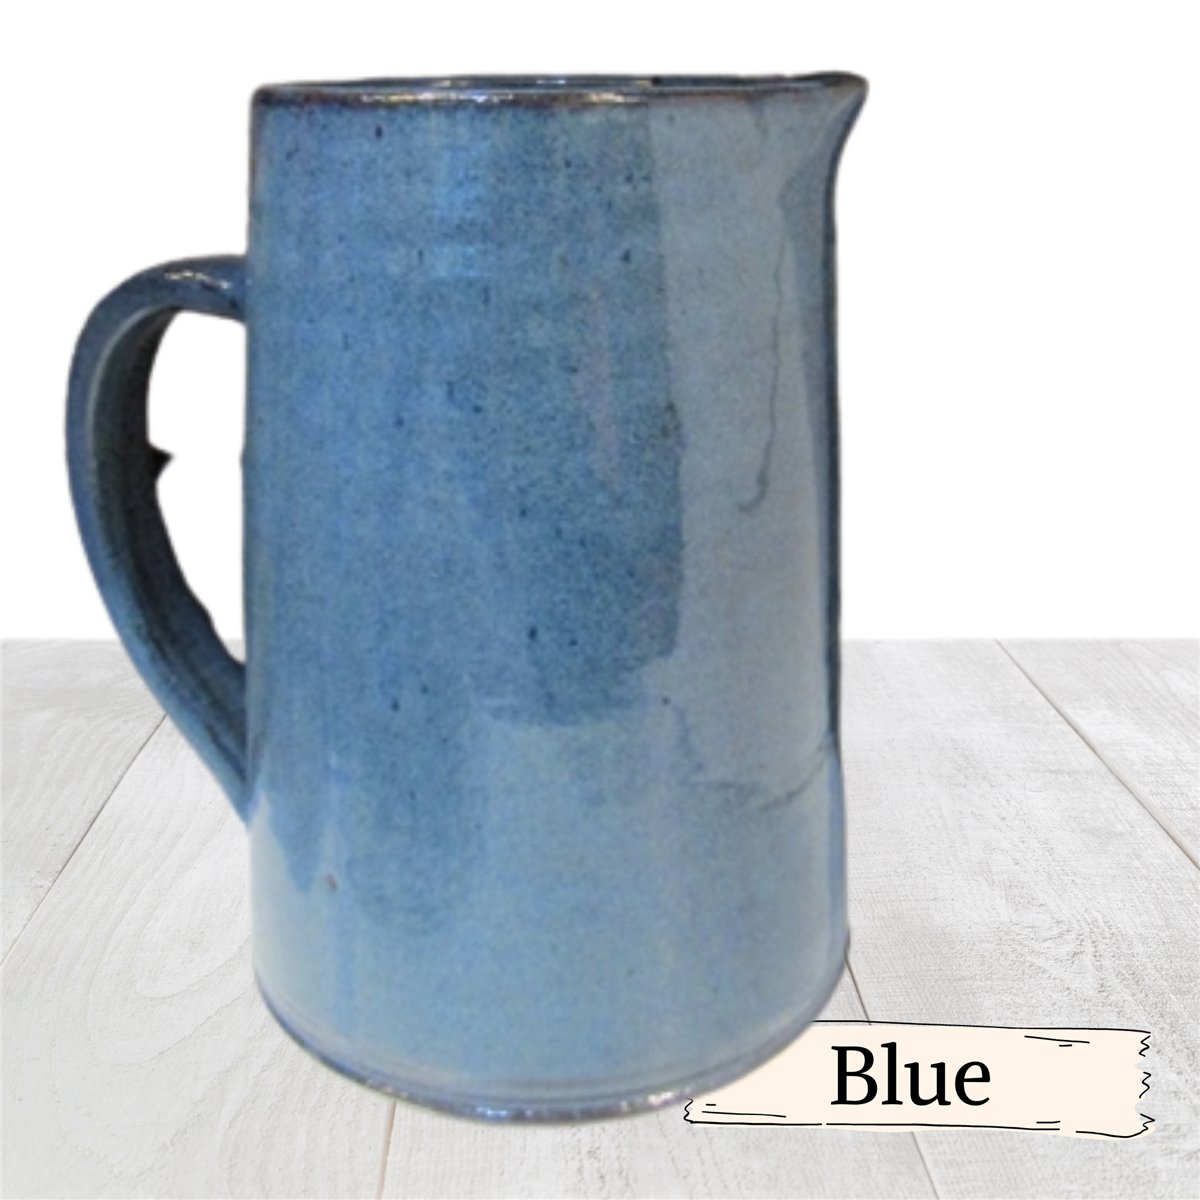 Large pottery pitcher with pour spout.  Hot or cold liquids